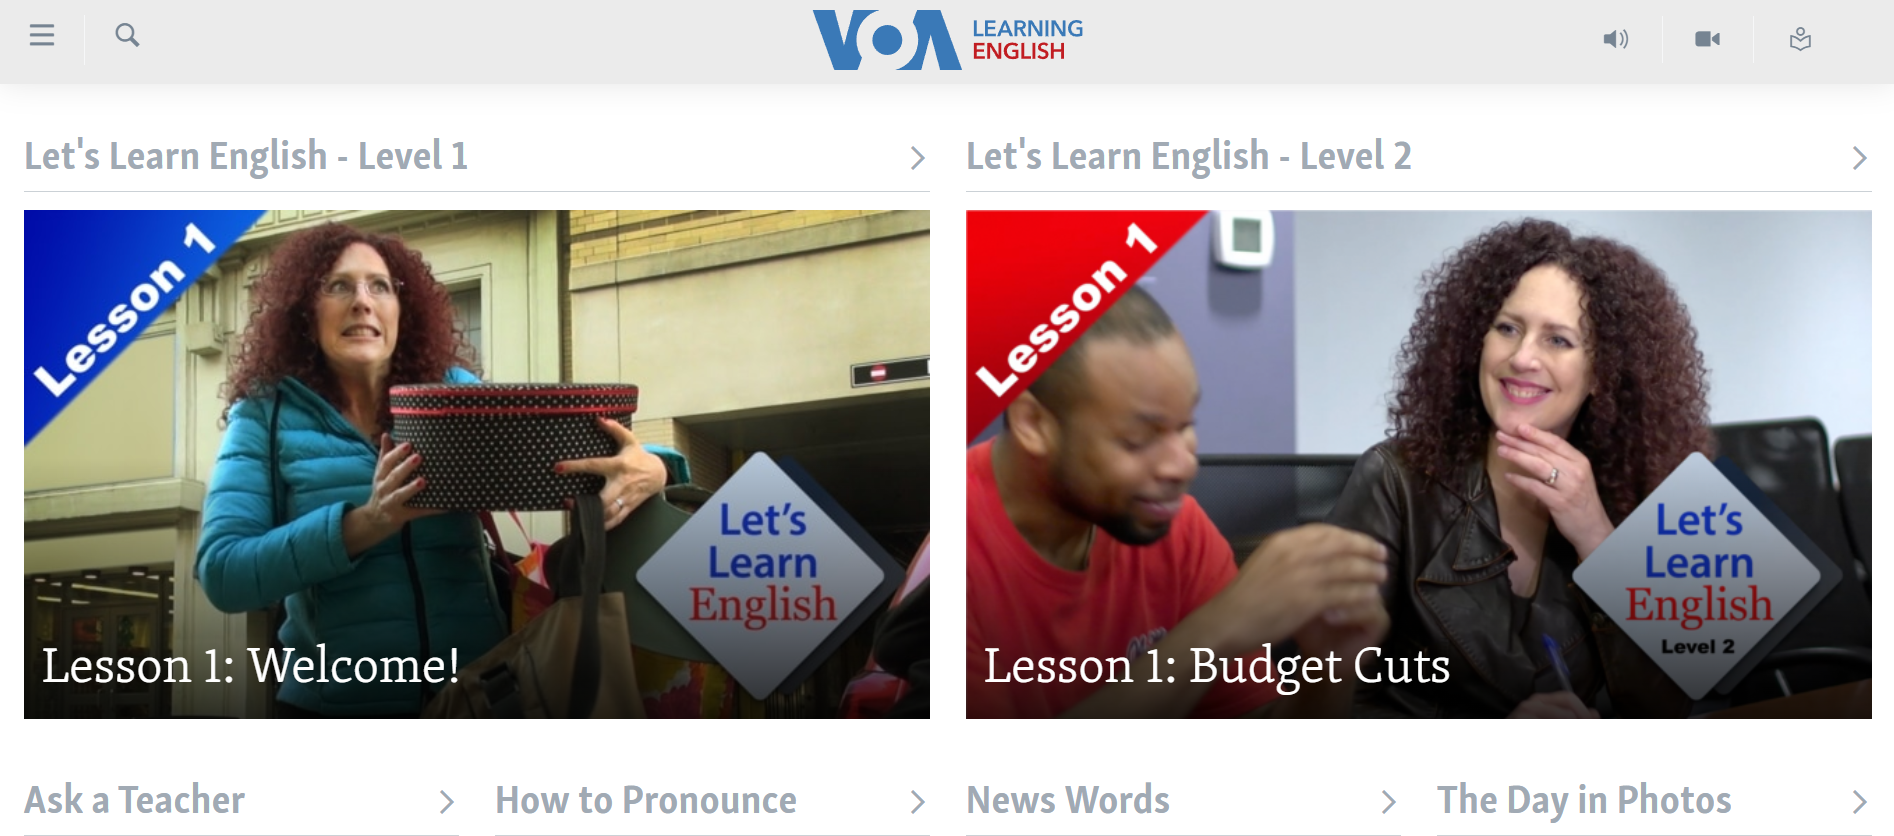 GEARVN - Trang web học tiếng Anh miễn phí VOA Learning English